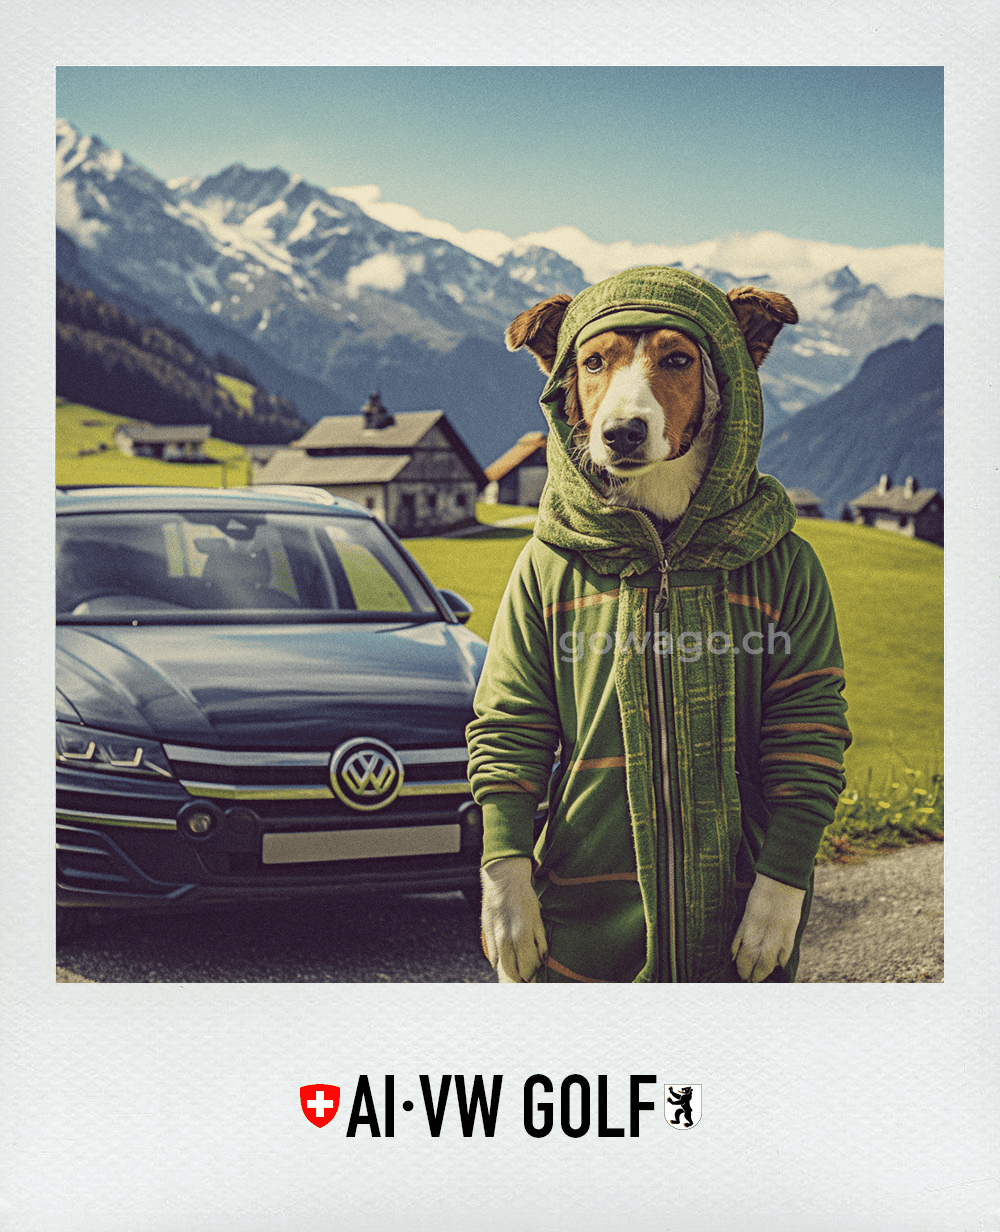 AI - VW GOLF